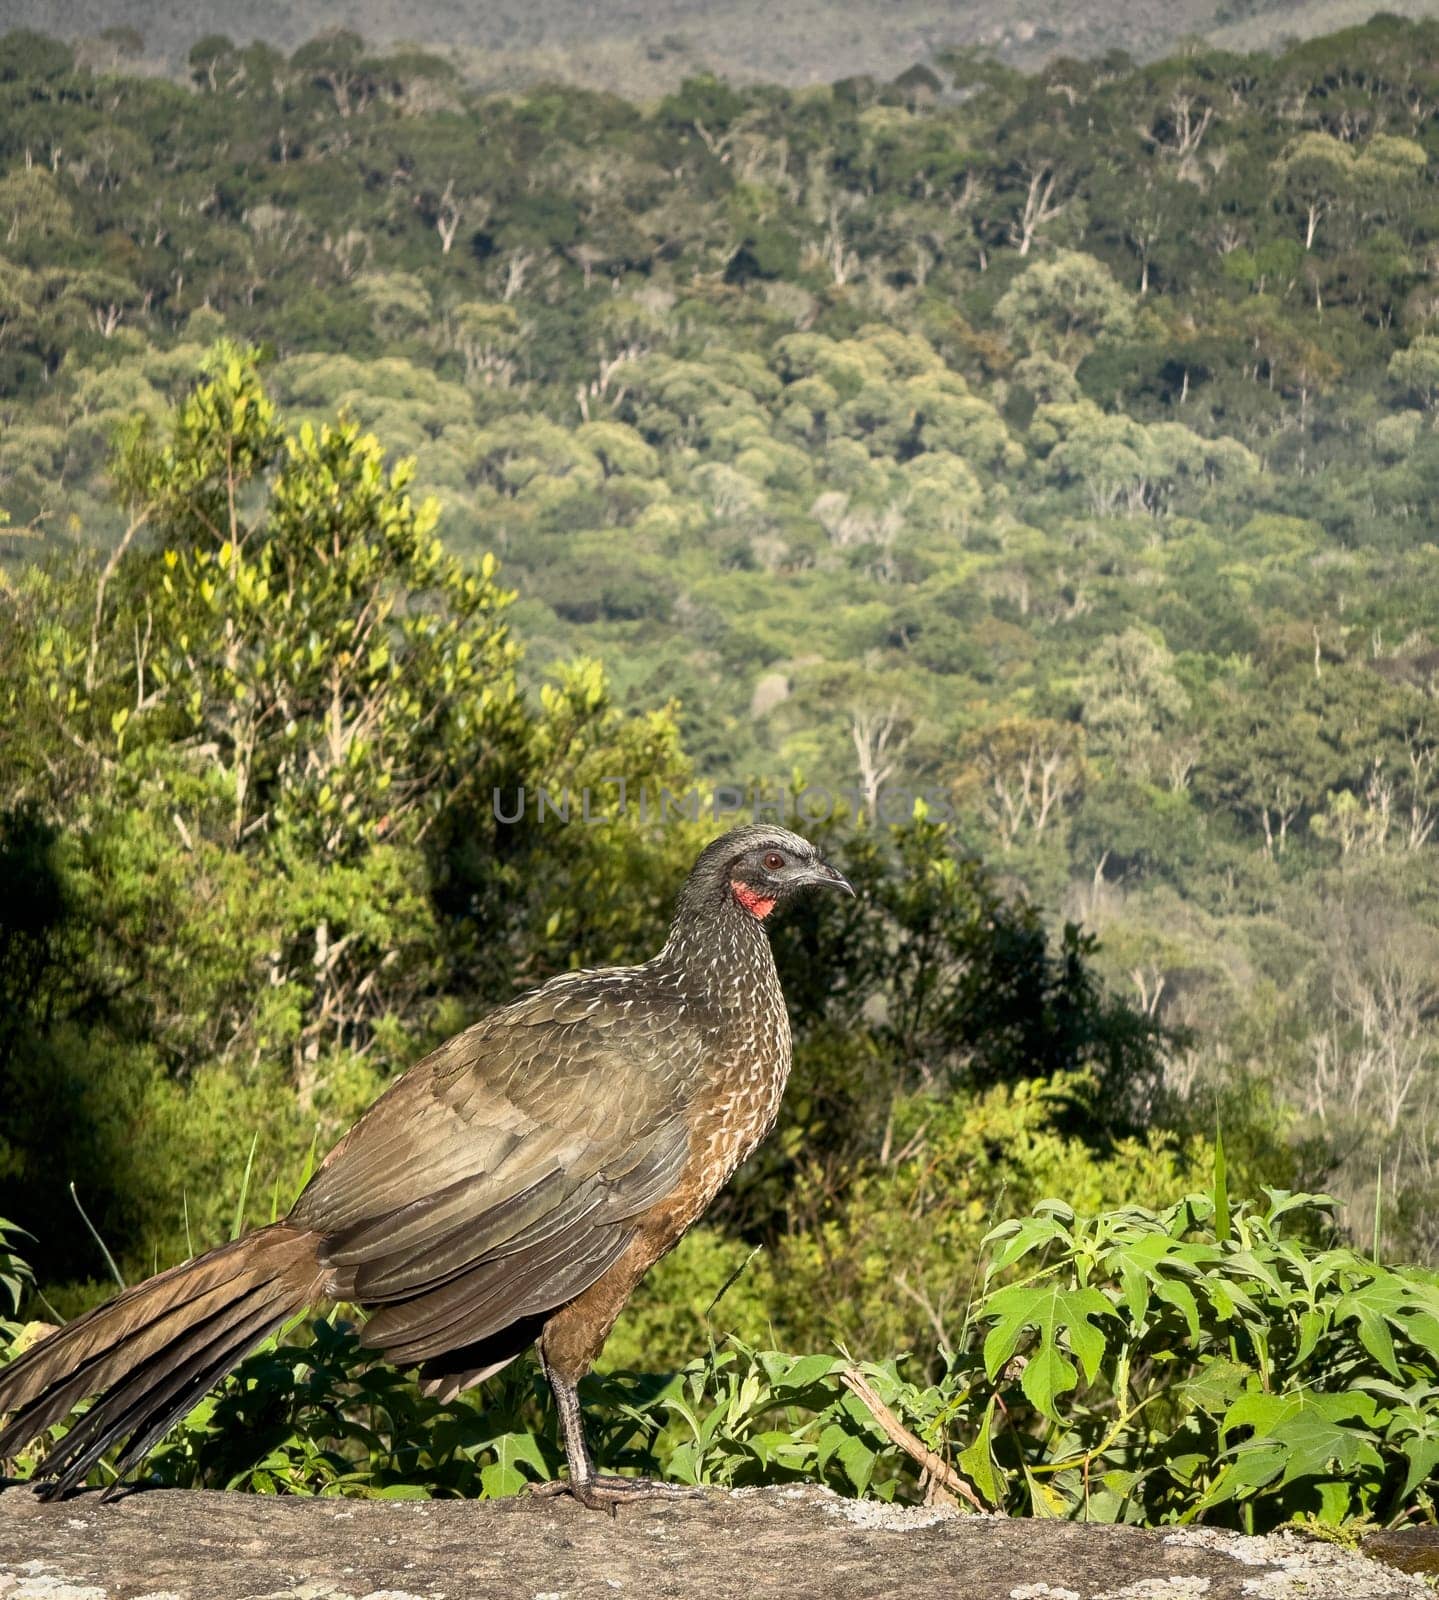 Wild Jacu Bird Posing Against Dense Forest Background in Daylight by FerradalFCG